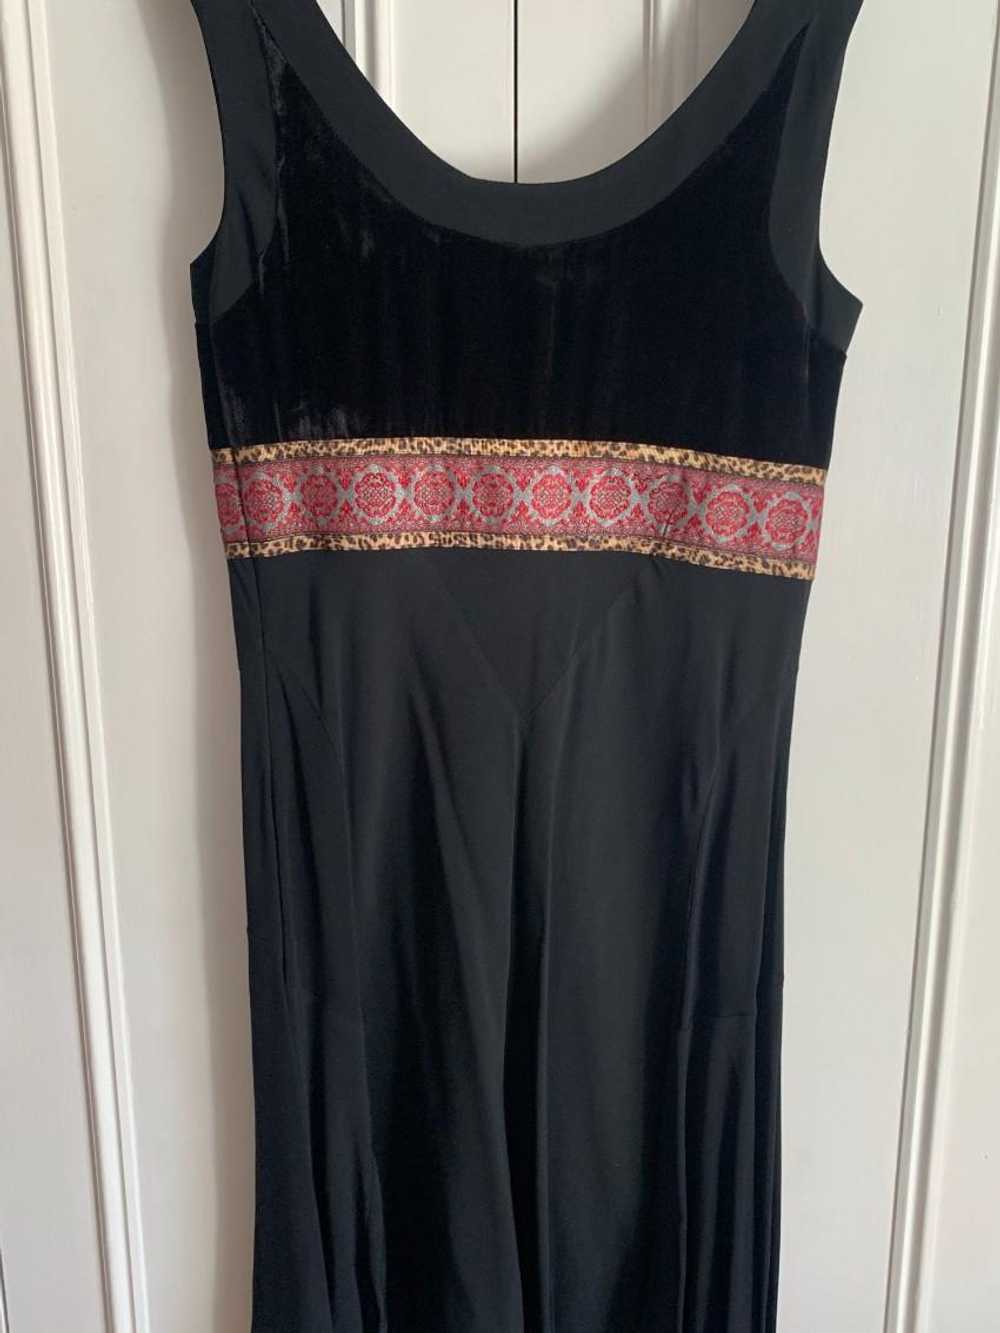 Galliano Galliano Black Satin Embroidered Dress - image 8